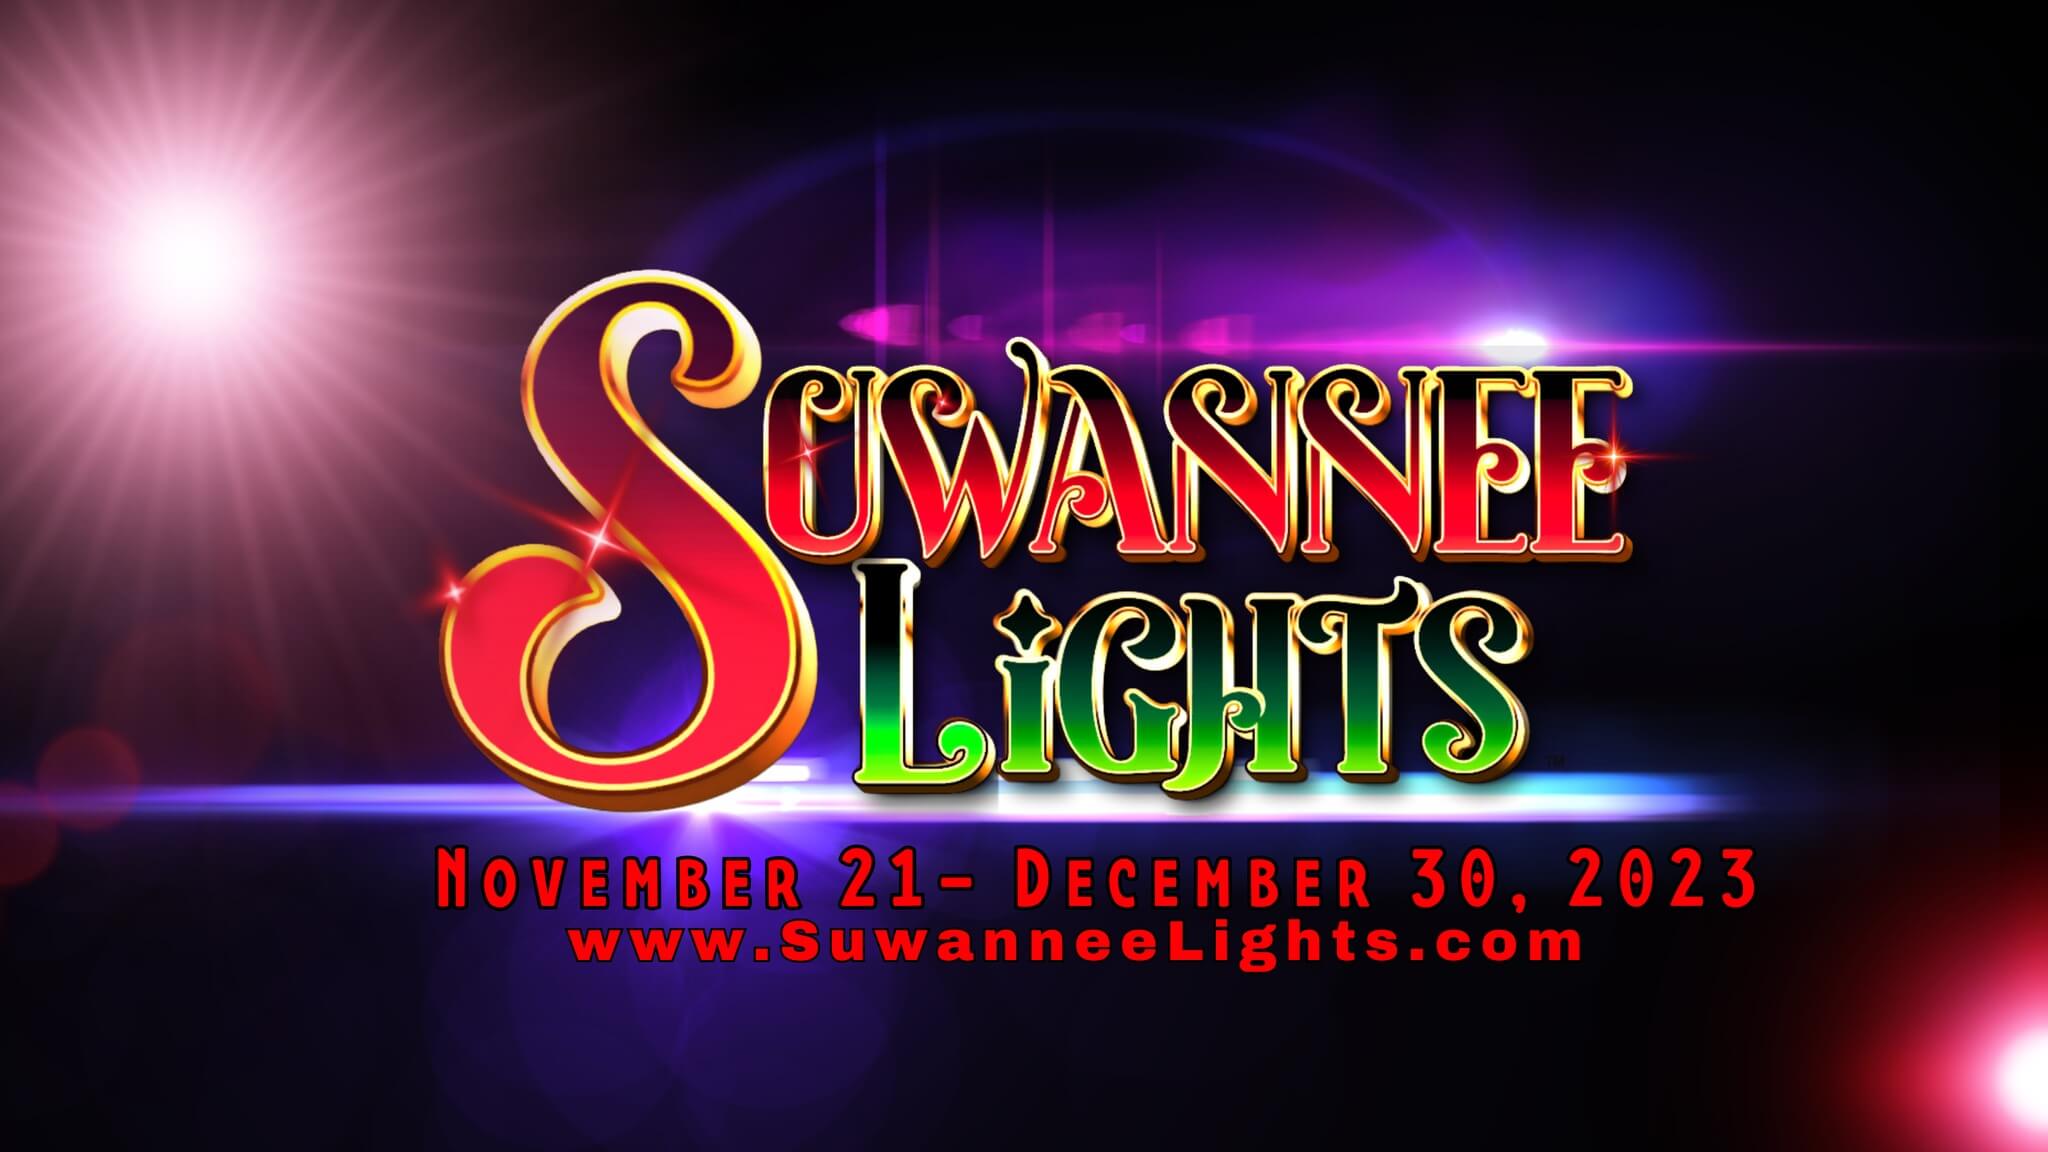 Graphic reaading Suwannee Lights November 21 - December 30, 2023.